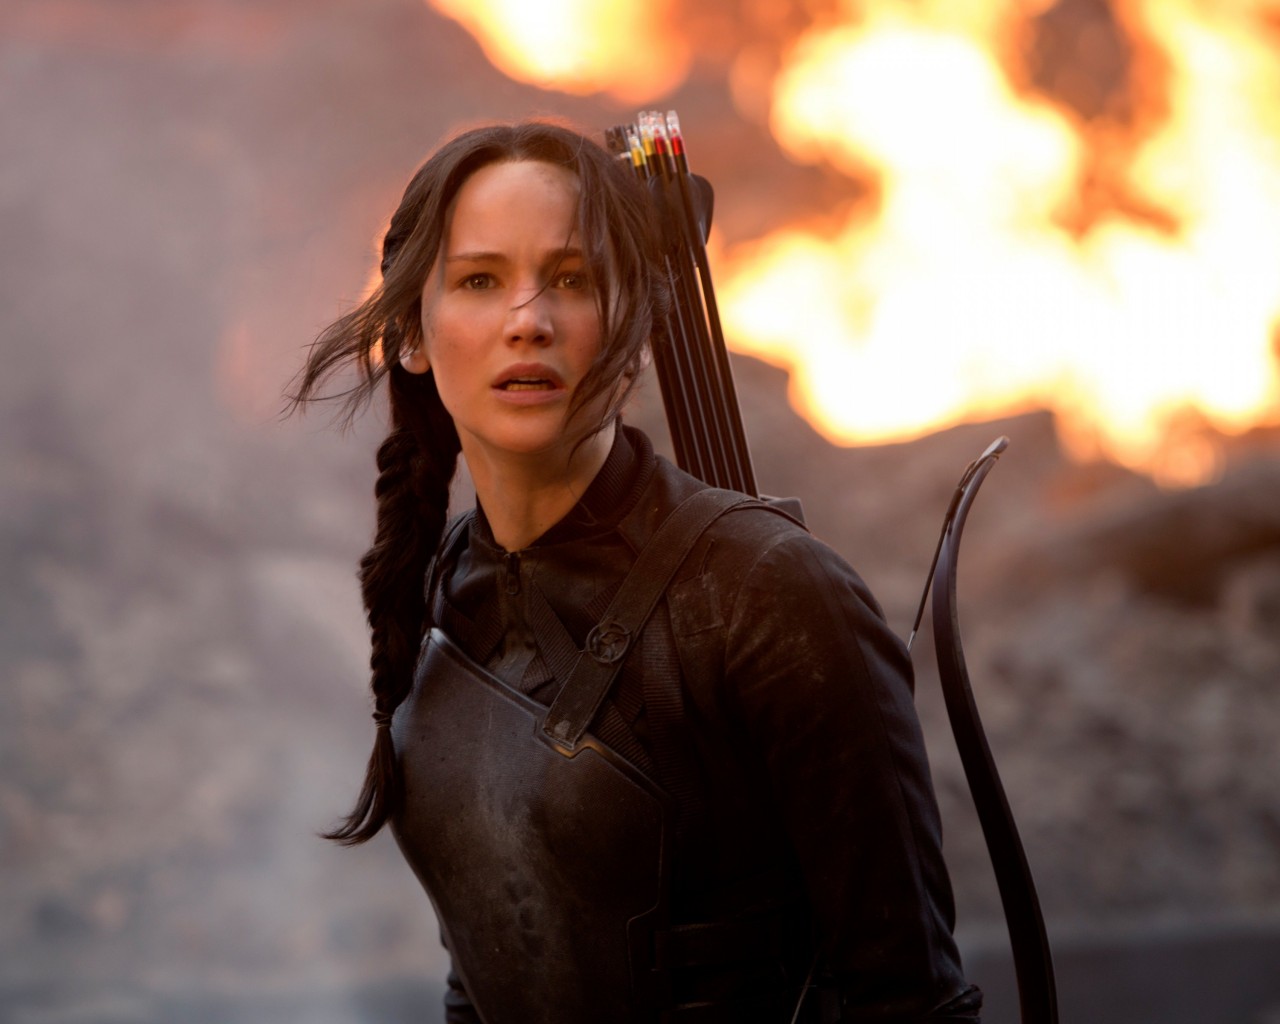 Jennifer Lawrence in The Hunger Games Wallpaper for Desktop 1280x1024